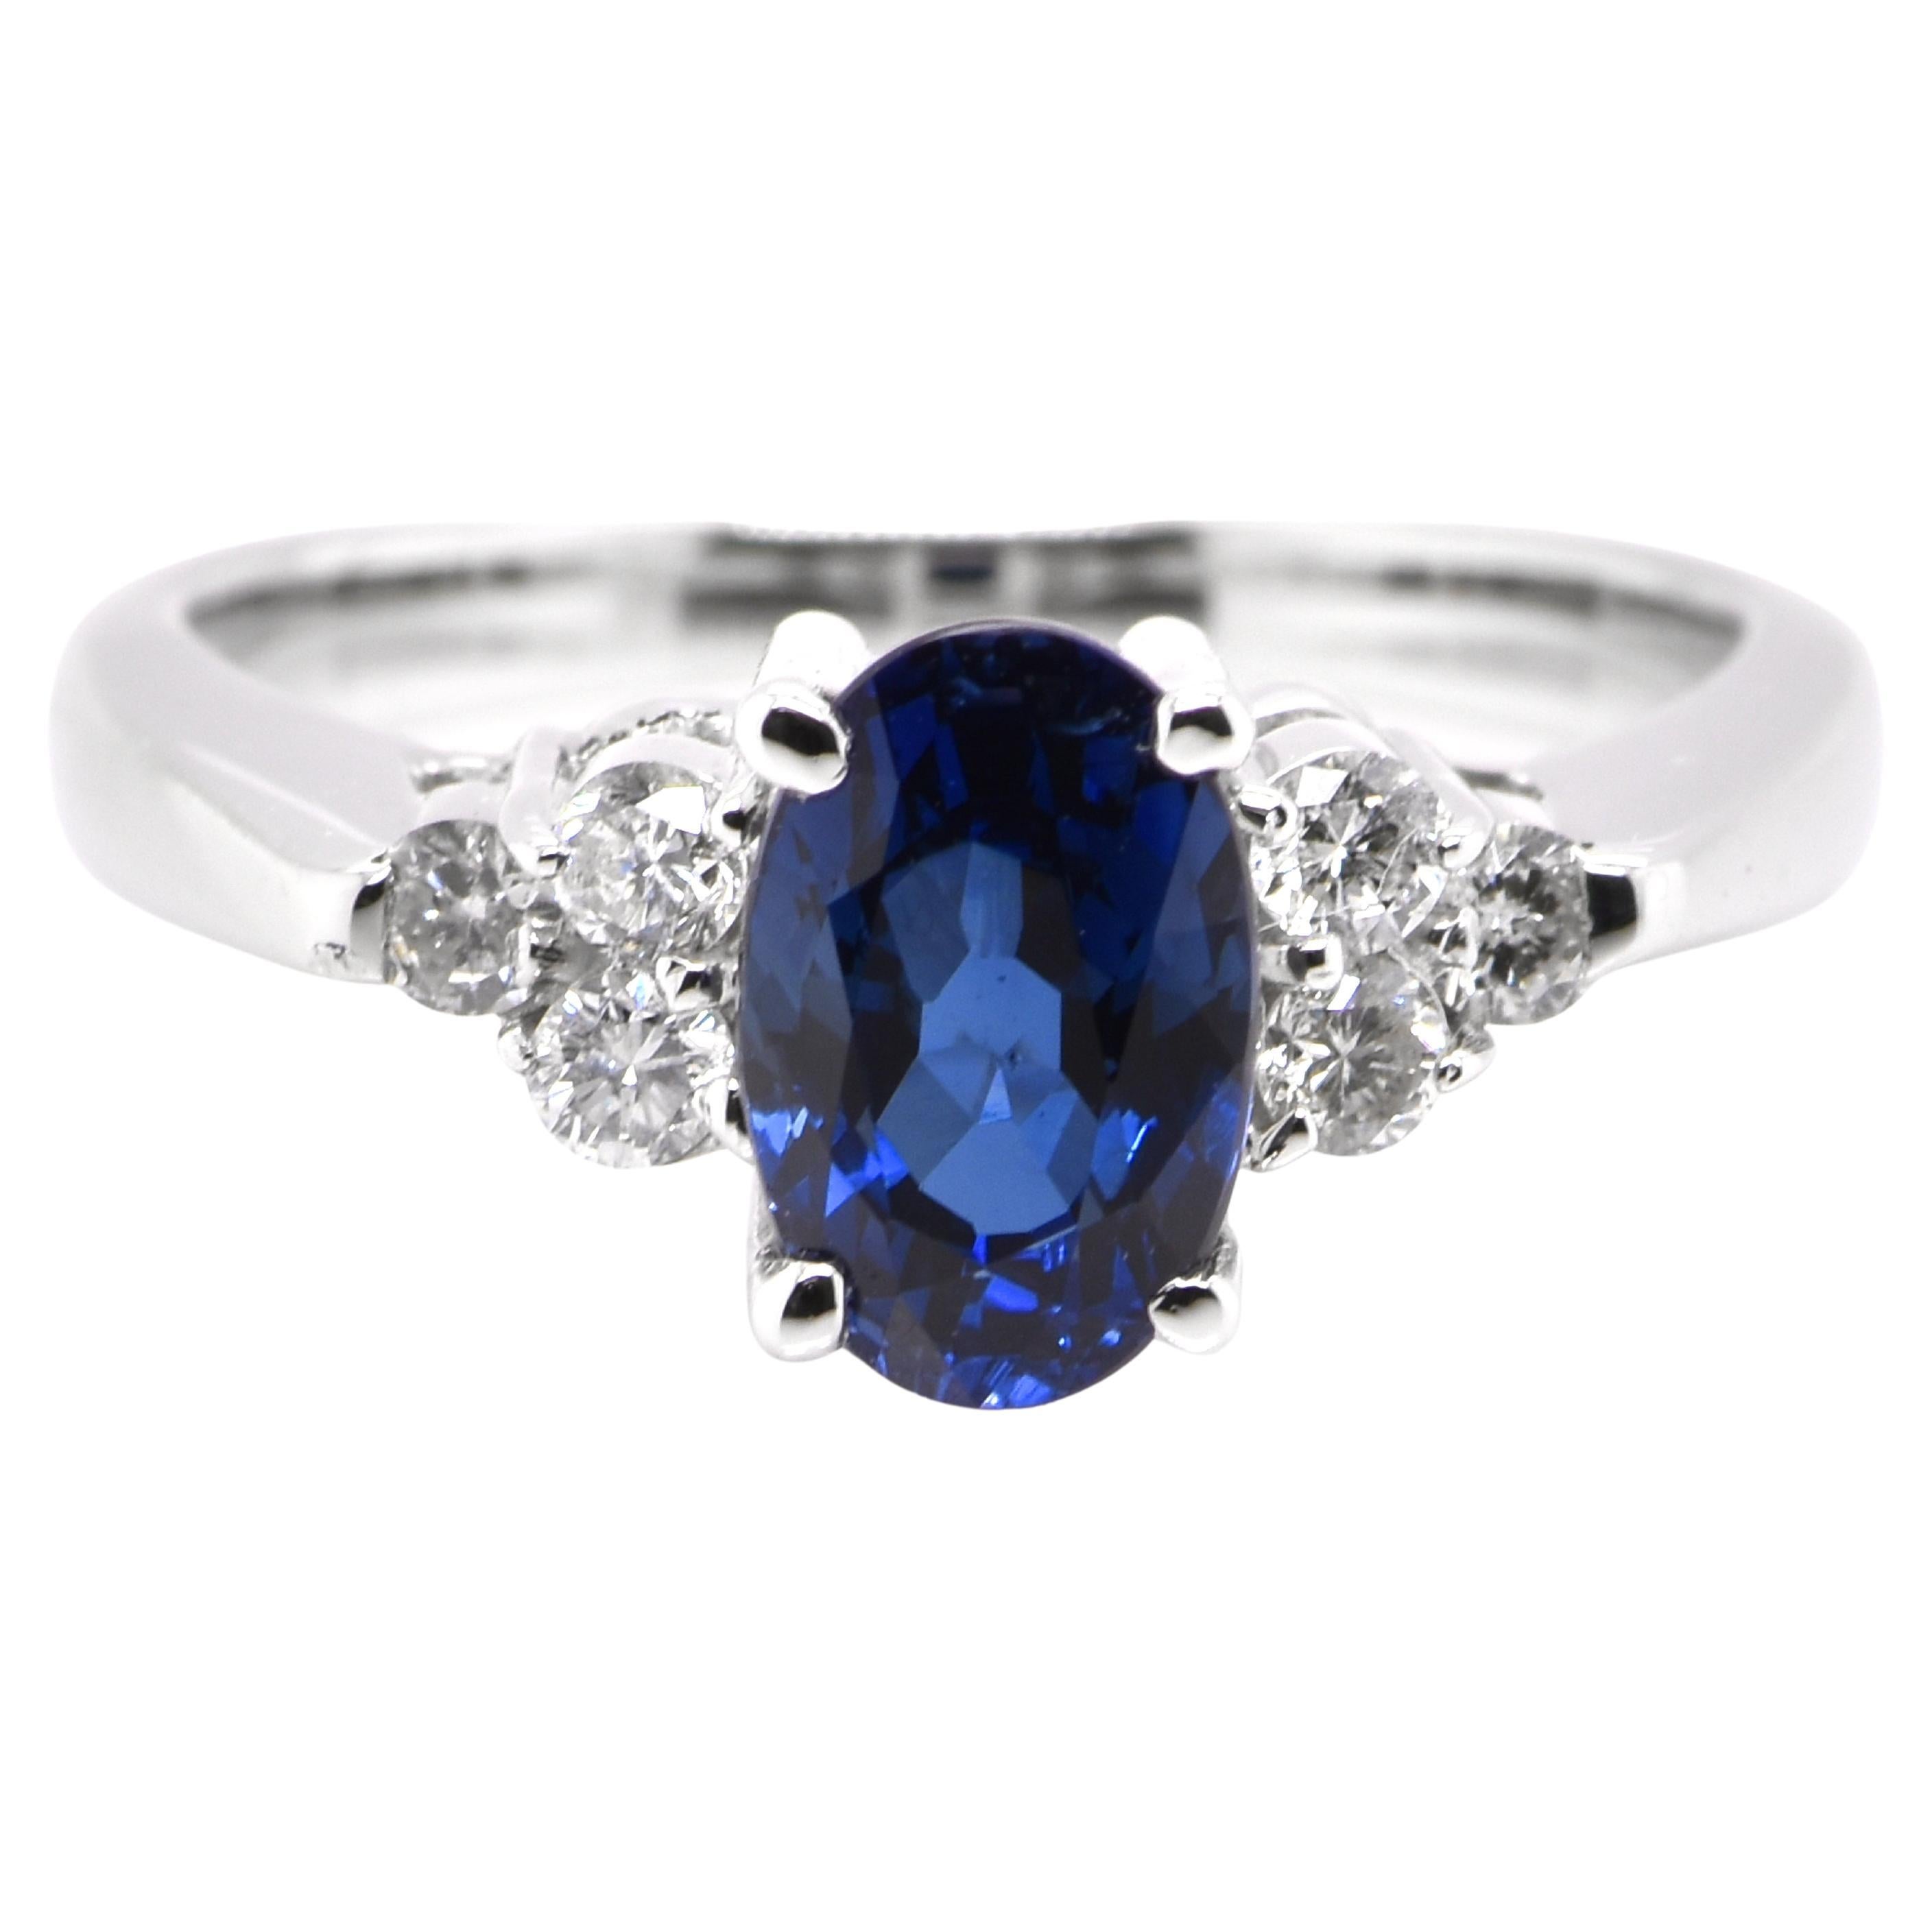 1.65 Carat Natural Blue Sapphire and Diamond Ring set in Platinum